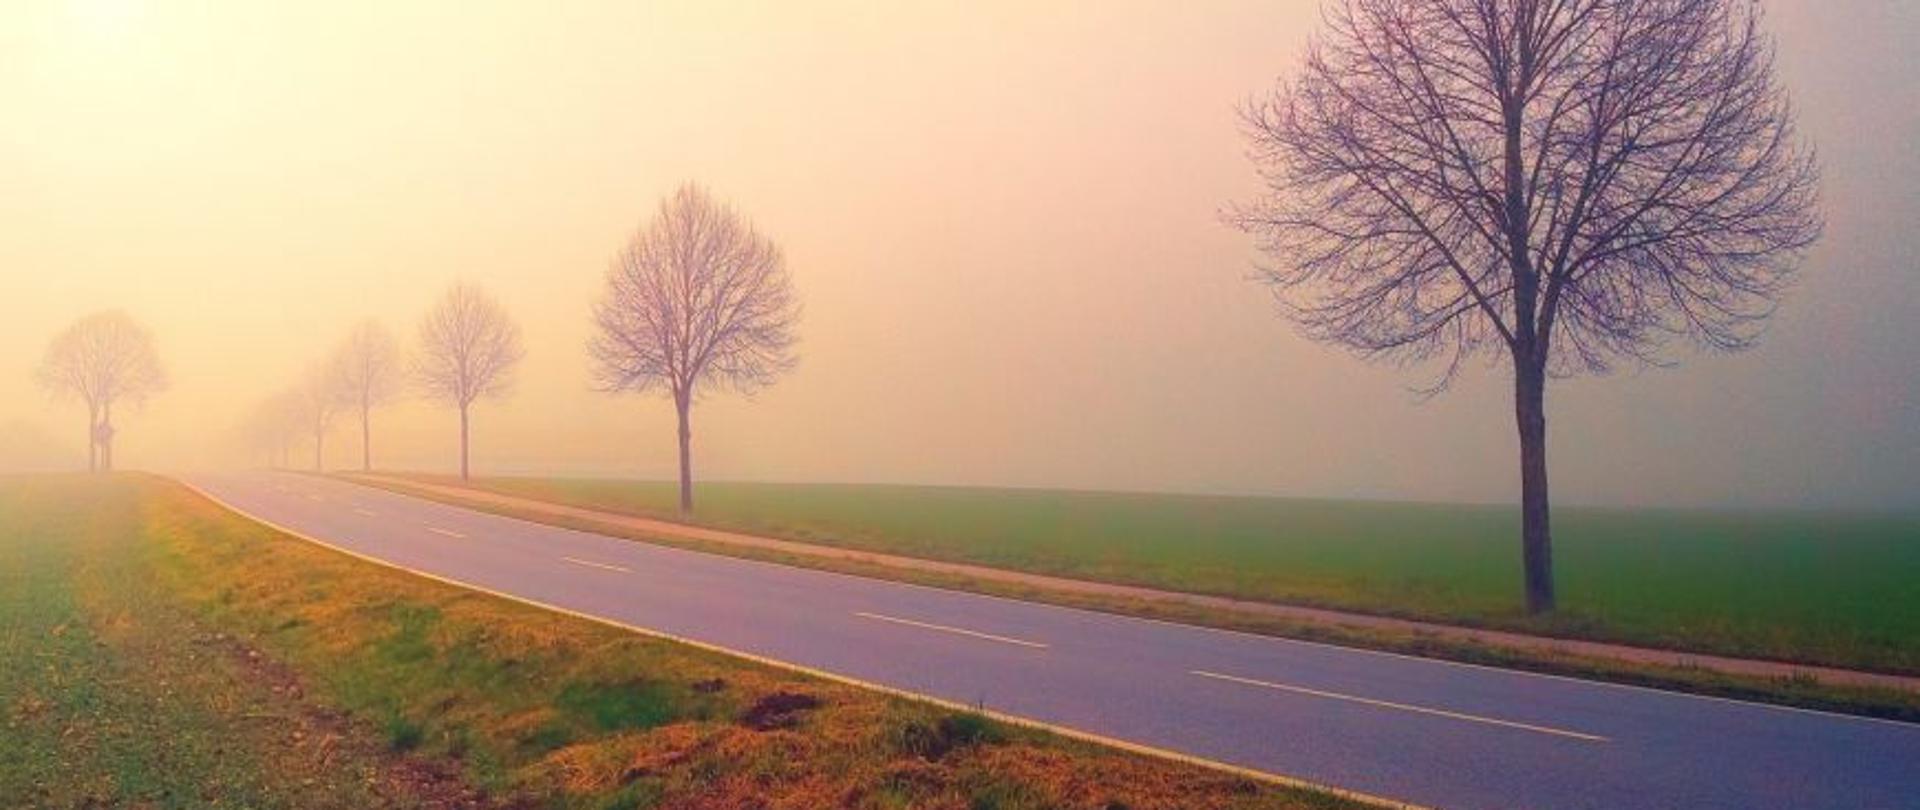 Droga, pobocza i drzewa, lekka mgła